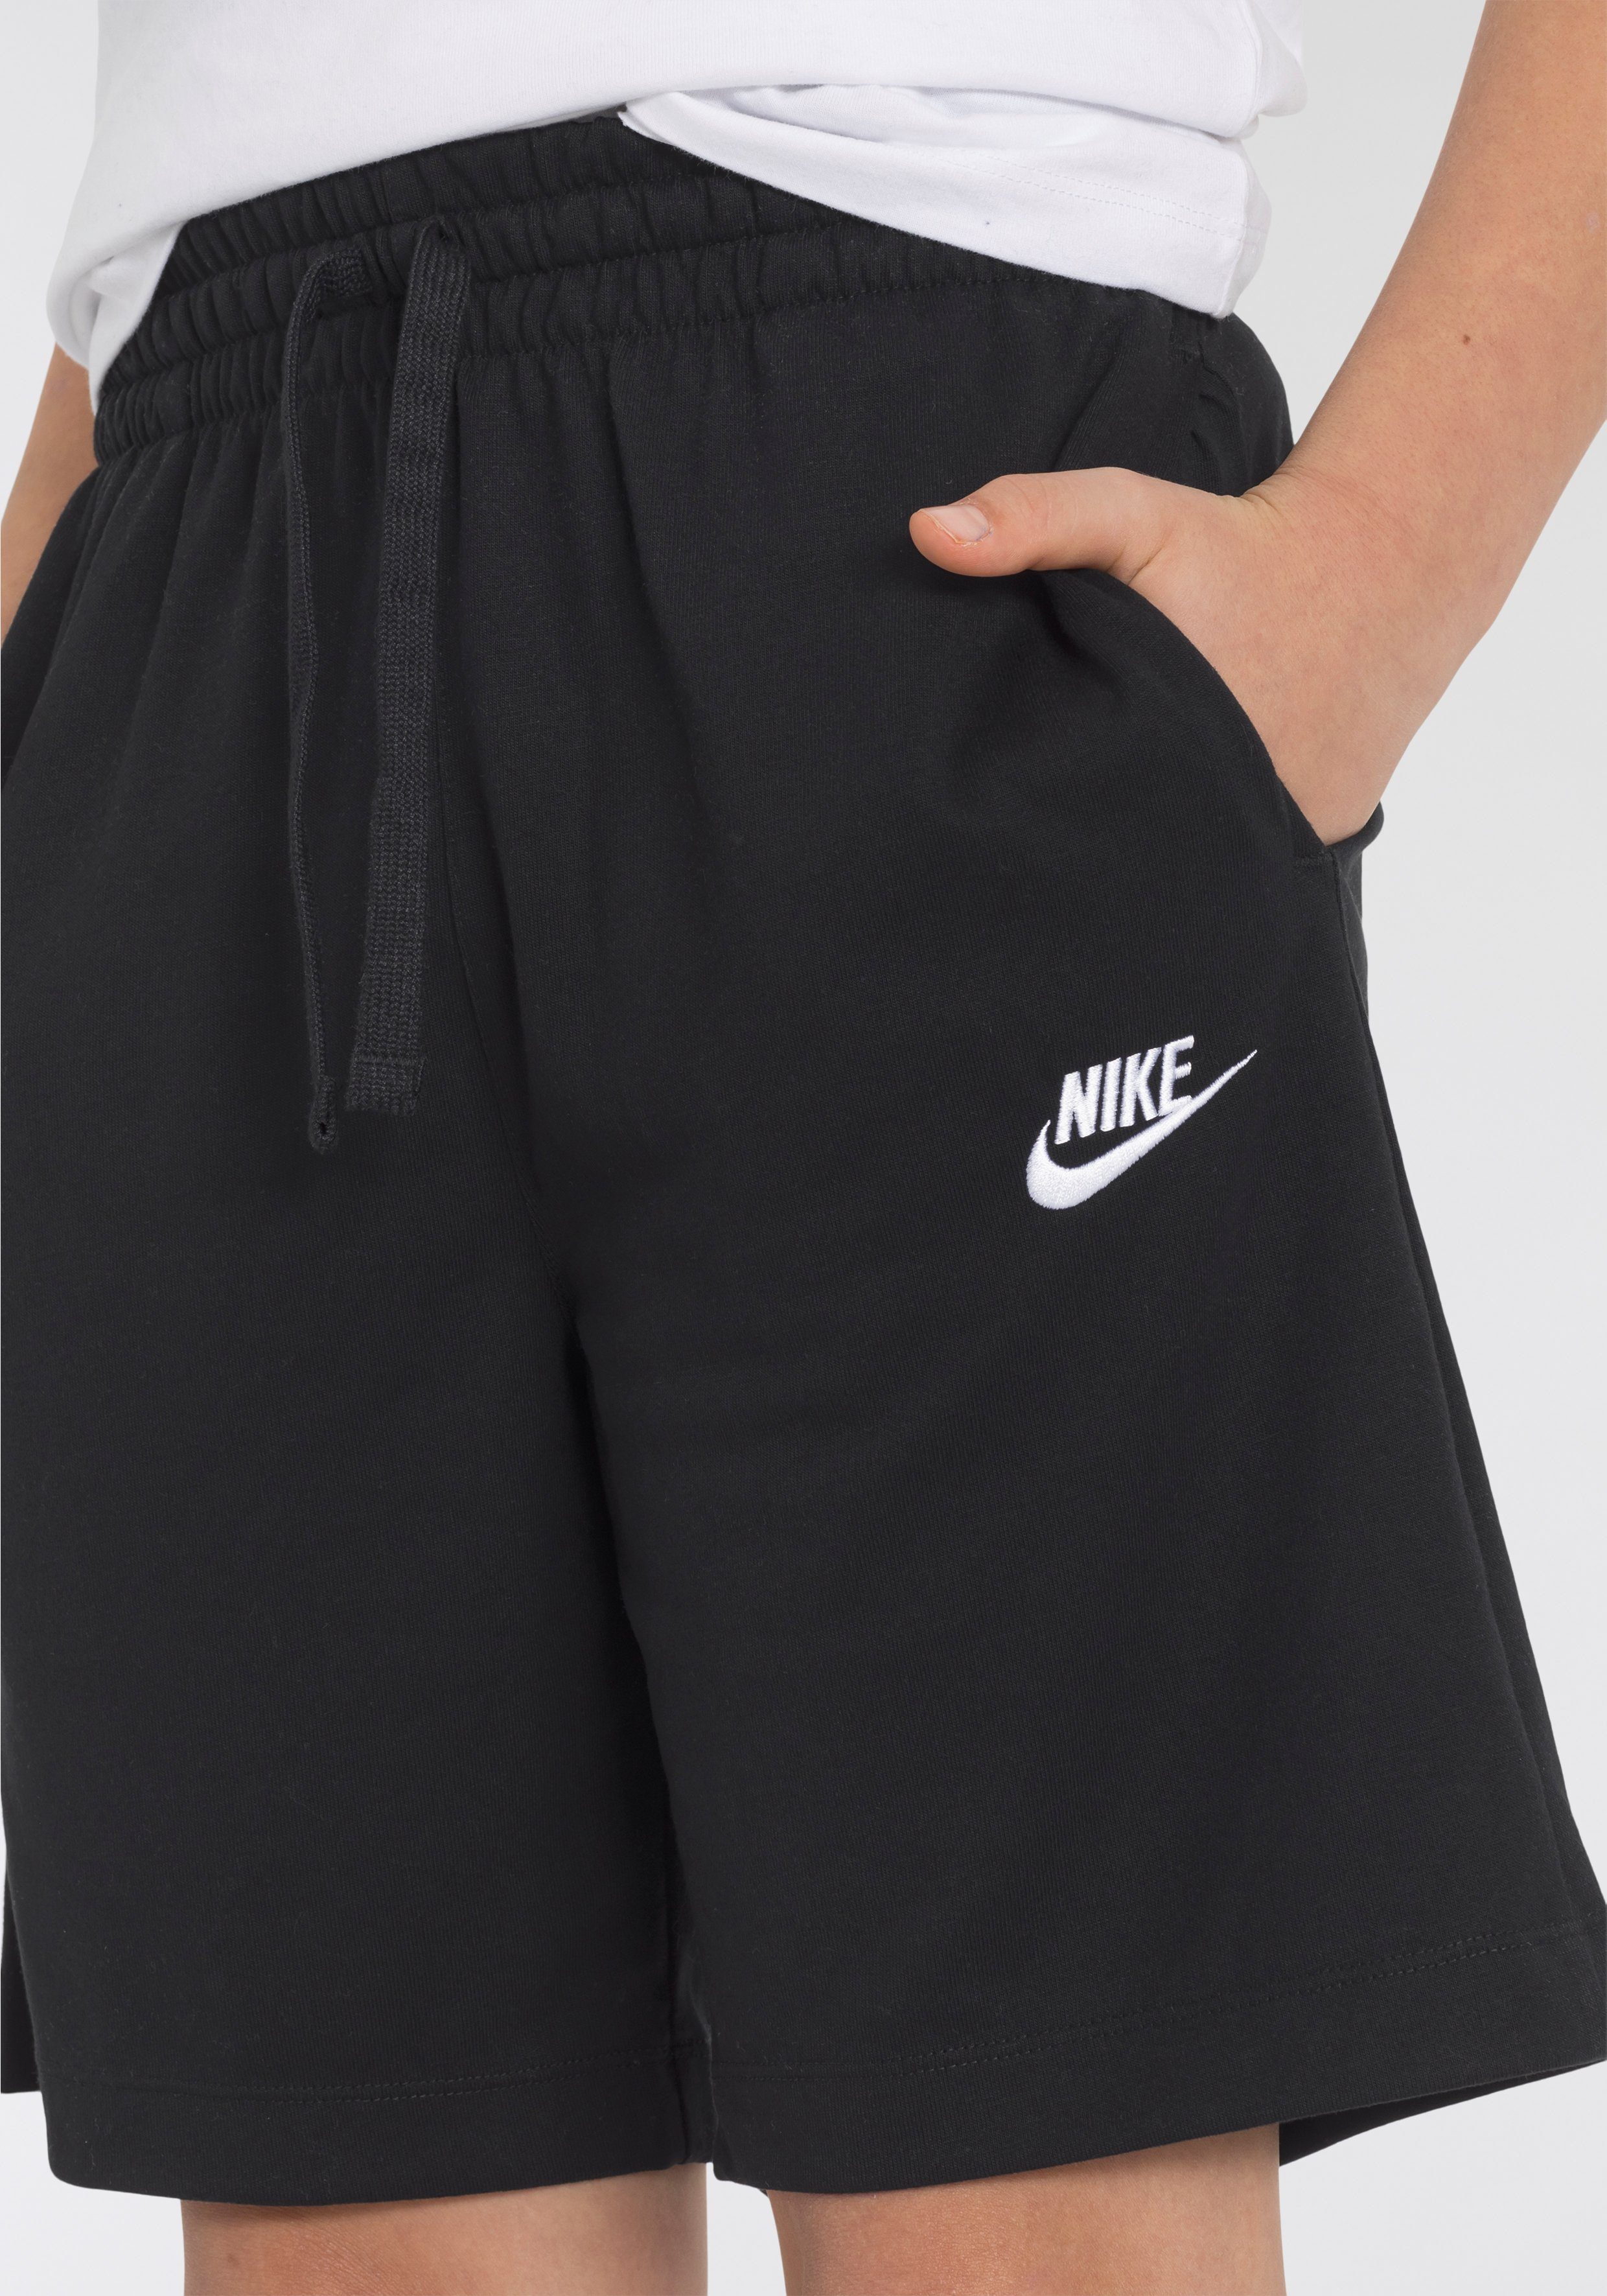 BIG KIDS' Sportswear Shorts SHORTS (BOYS) Nike JERSEY schwarz